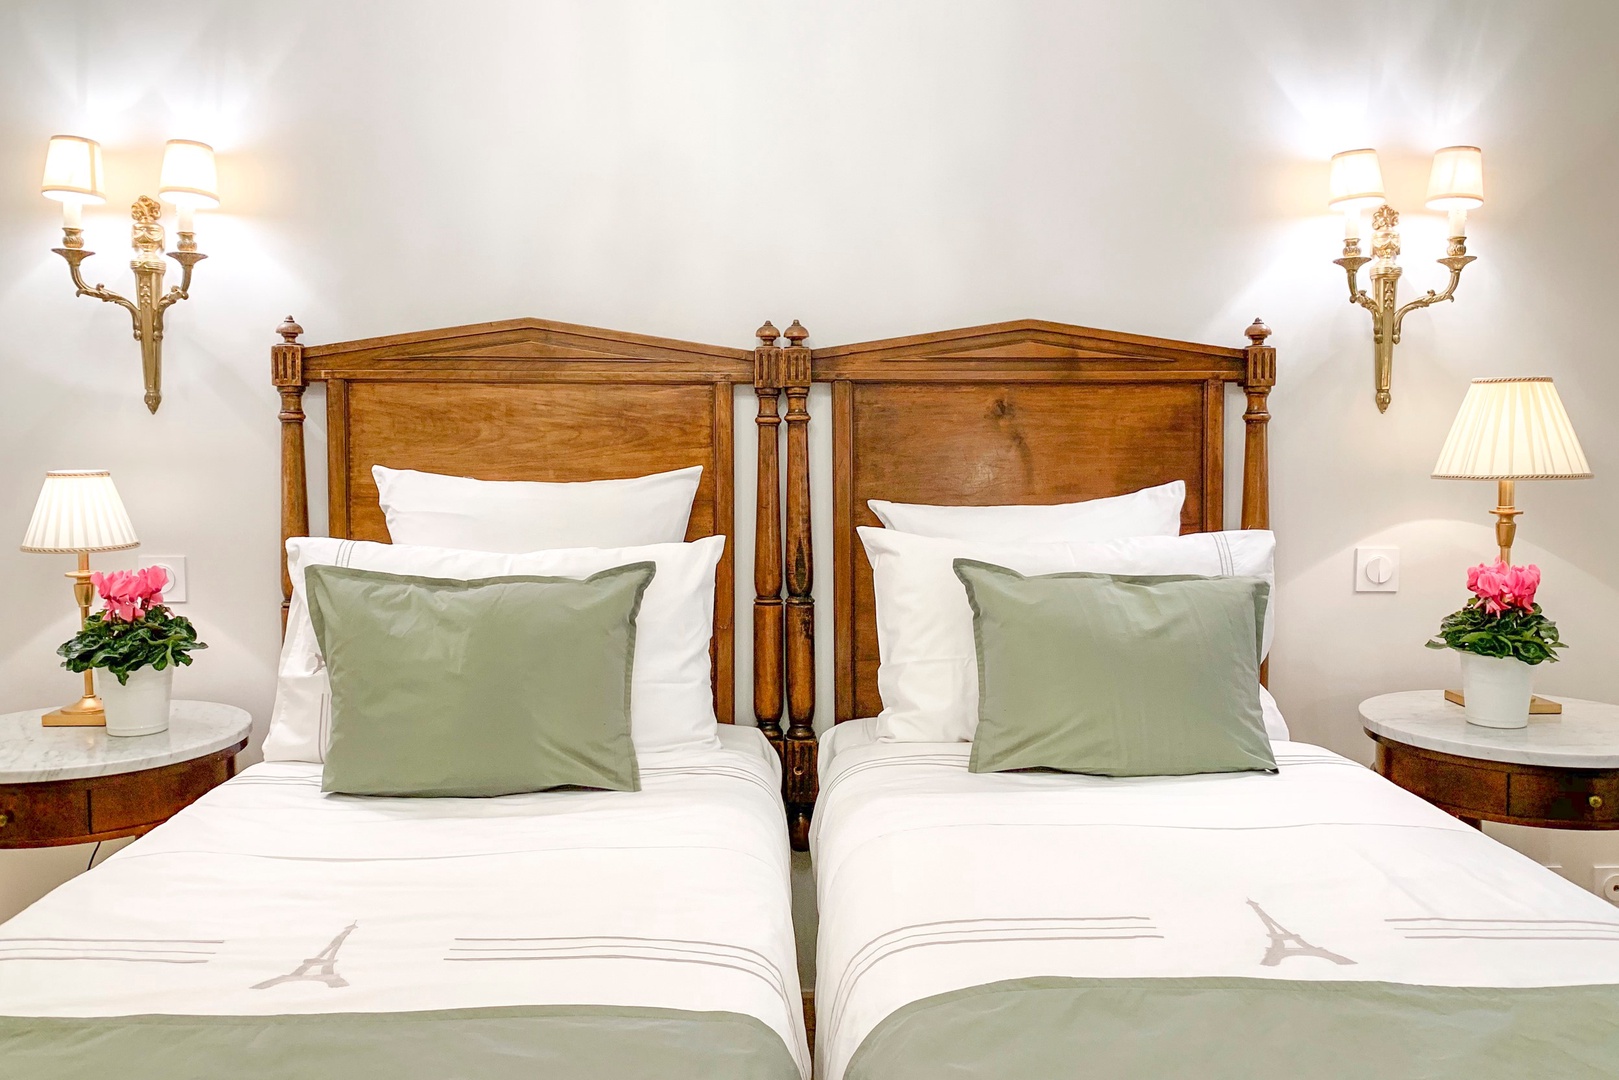 Get a good night's sleep in the luxury bedding.